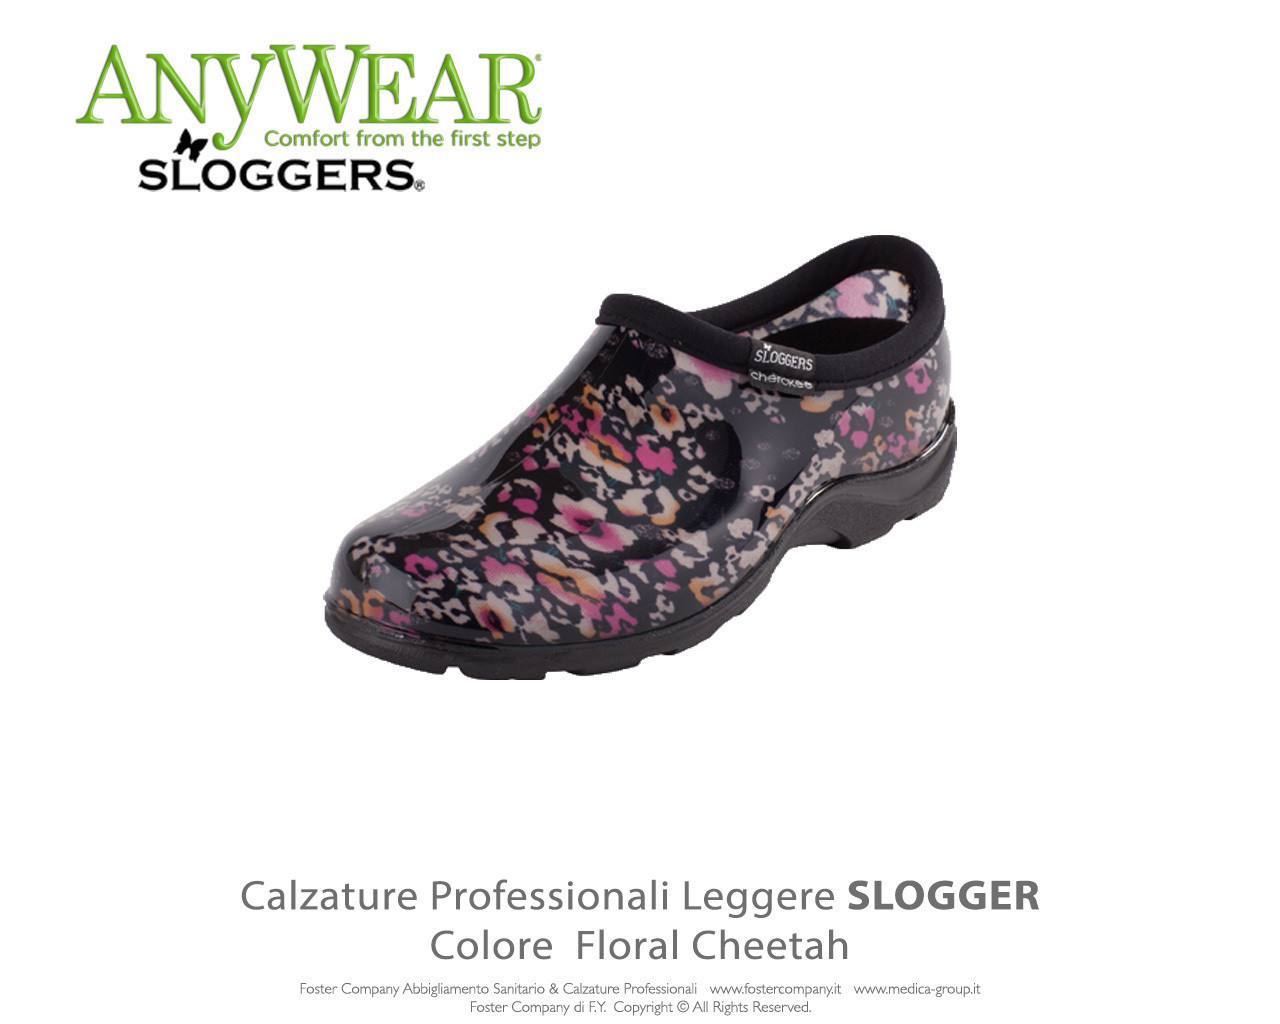 Calzature Professionali Anywear SLOGGER Colore Floral Cheetah